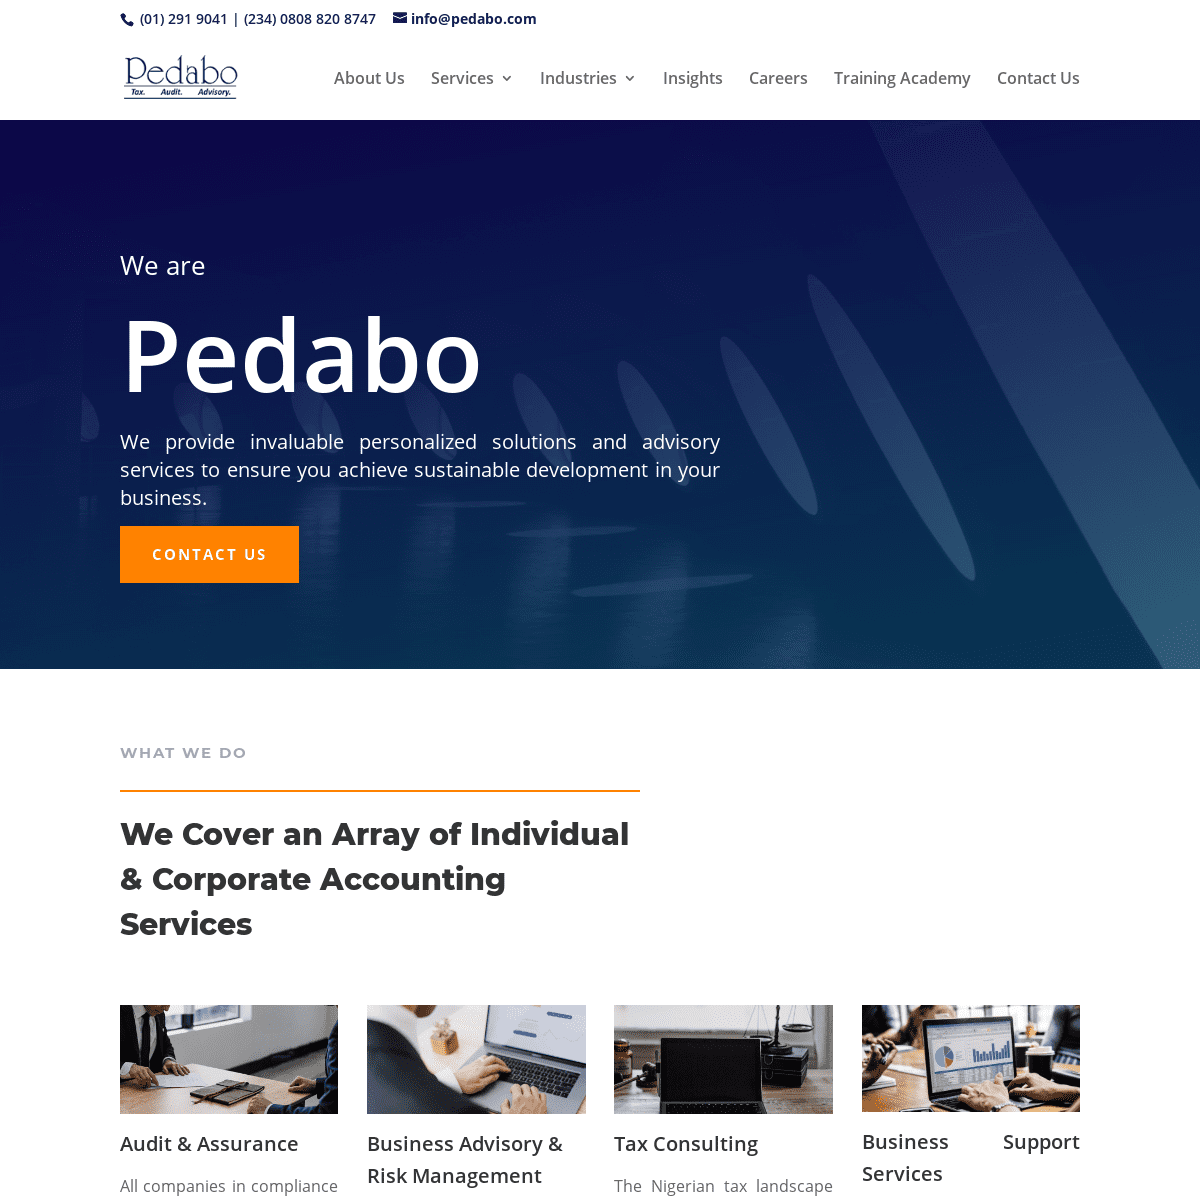 A complete backup of pedabo.com